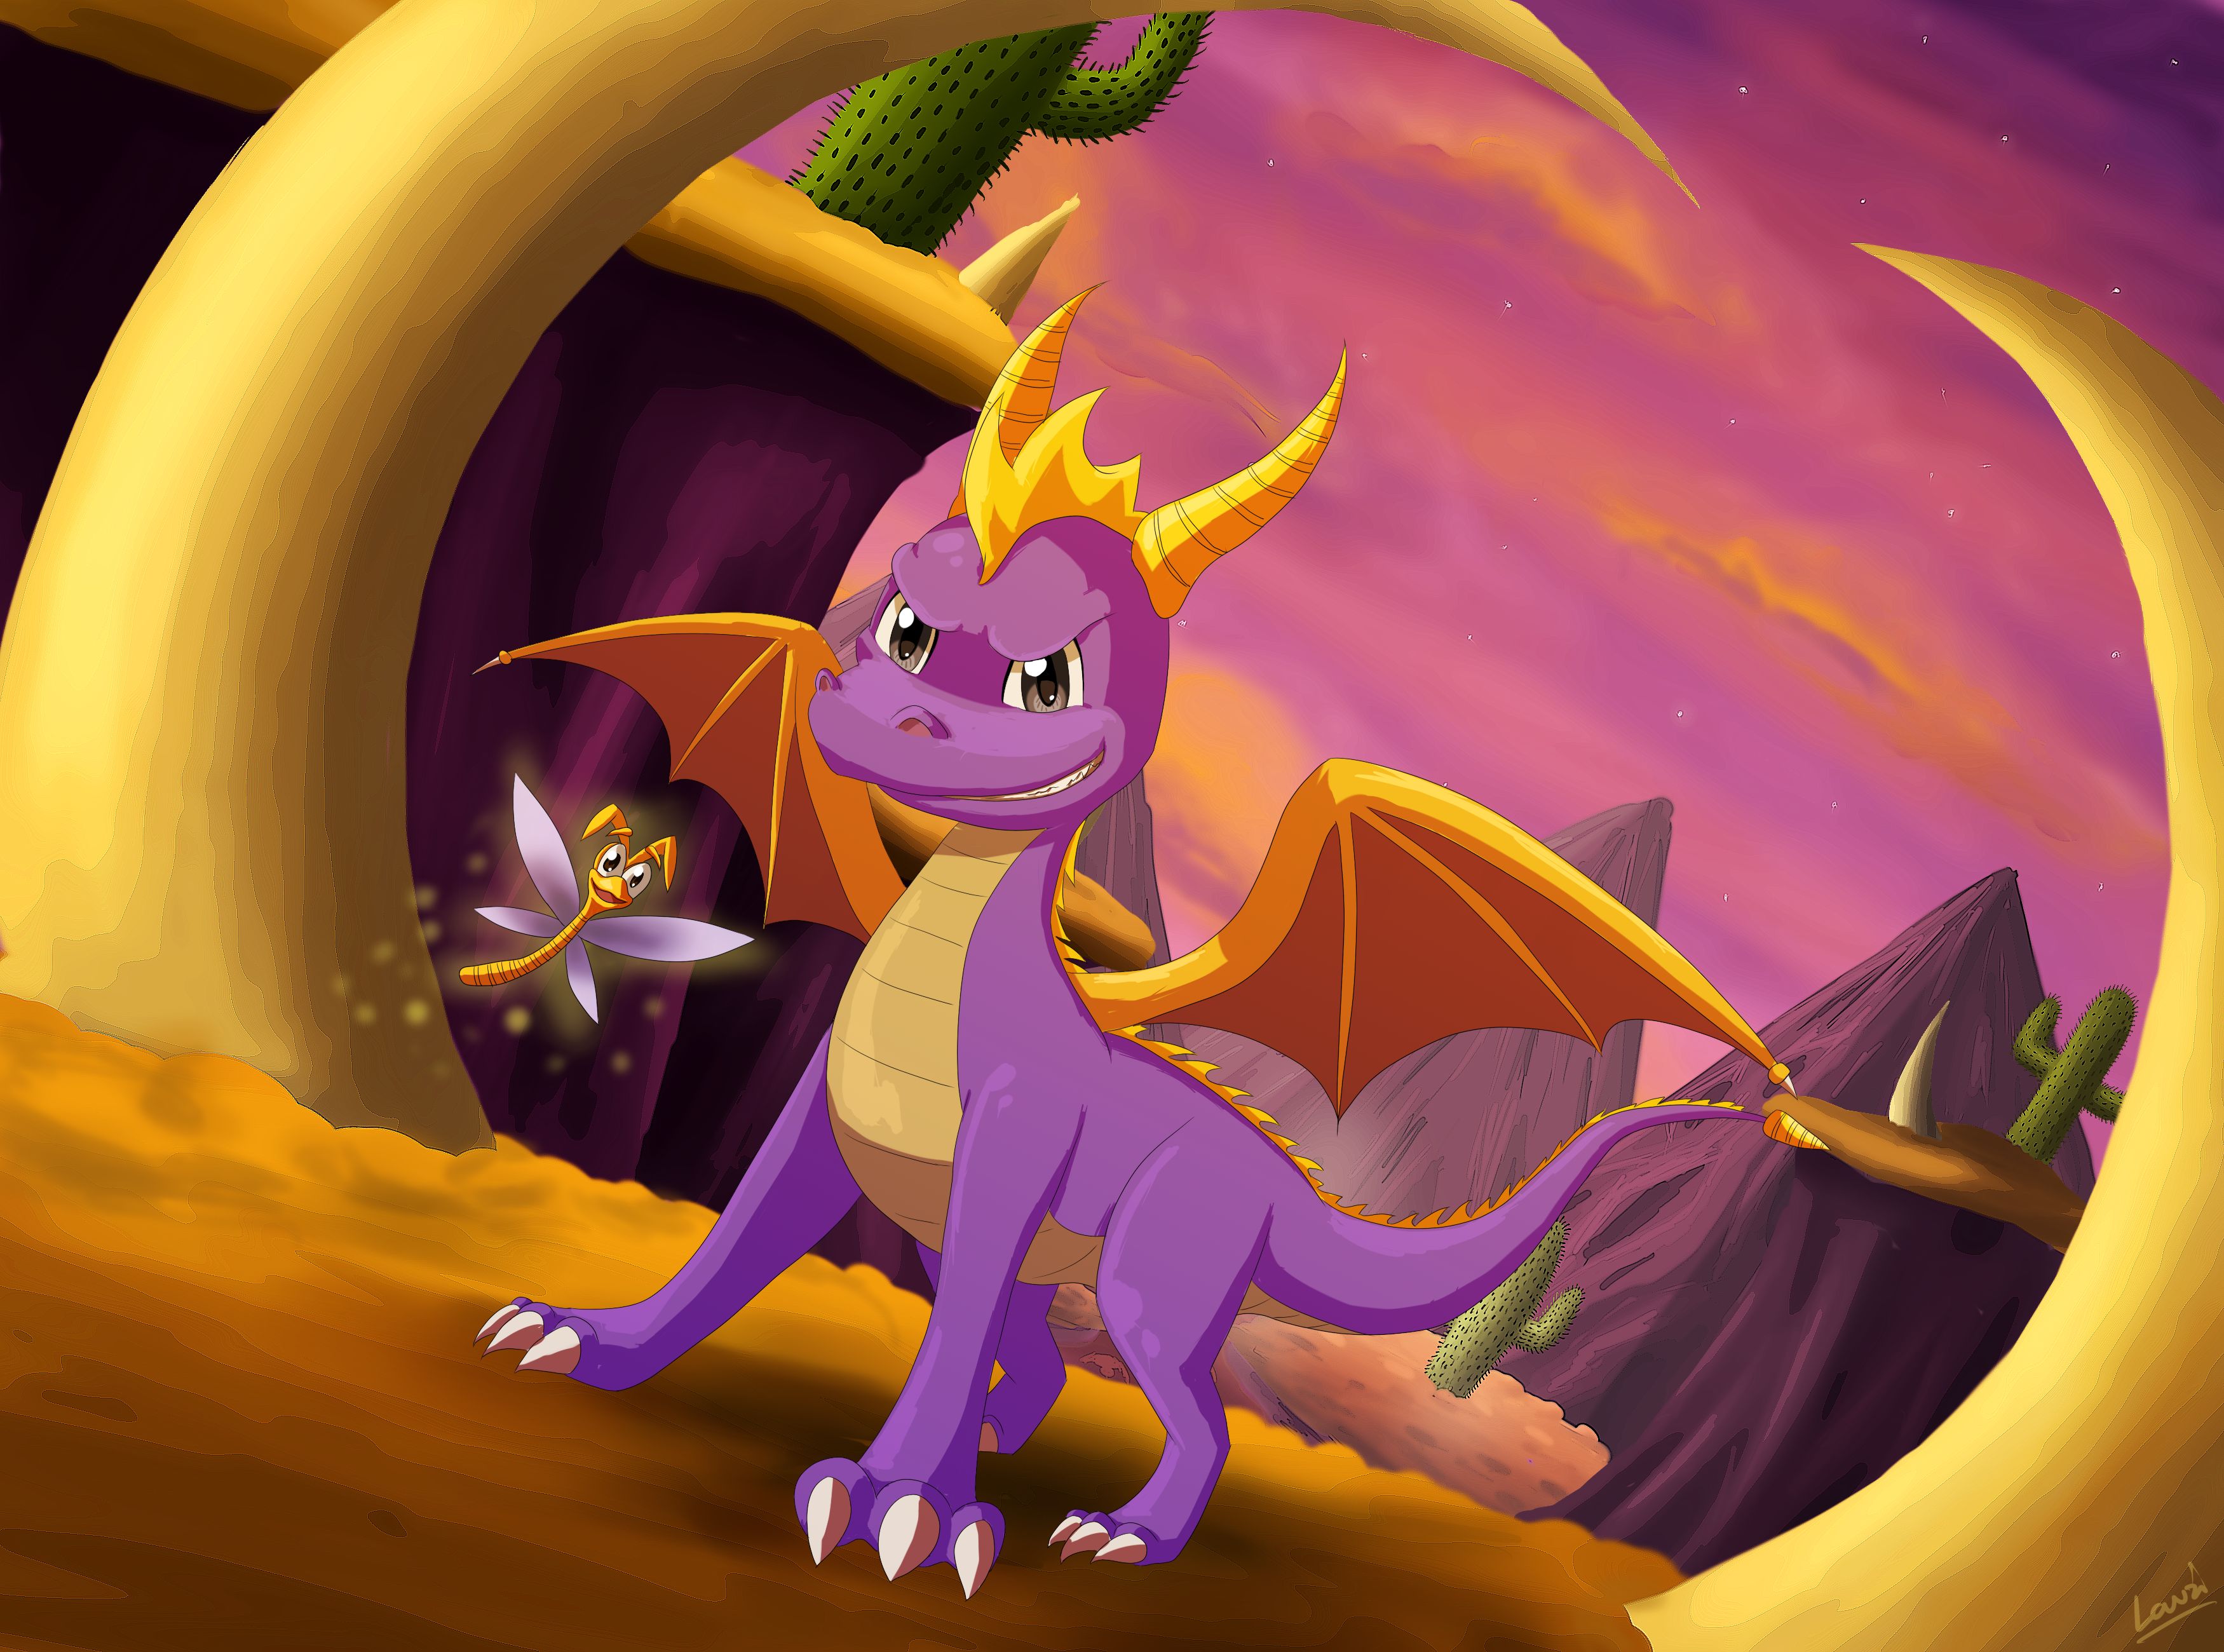 Descarga gratis la imagen Videojuego, Spyro (Personaje), Spyro The Dragon, Sparx La Libélula en el escritorio de tu PC